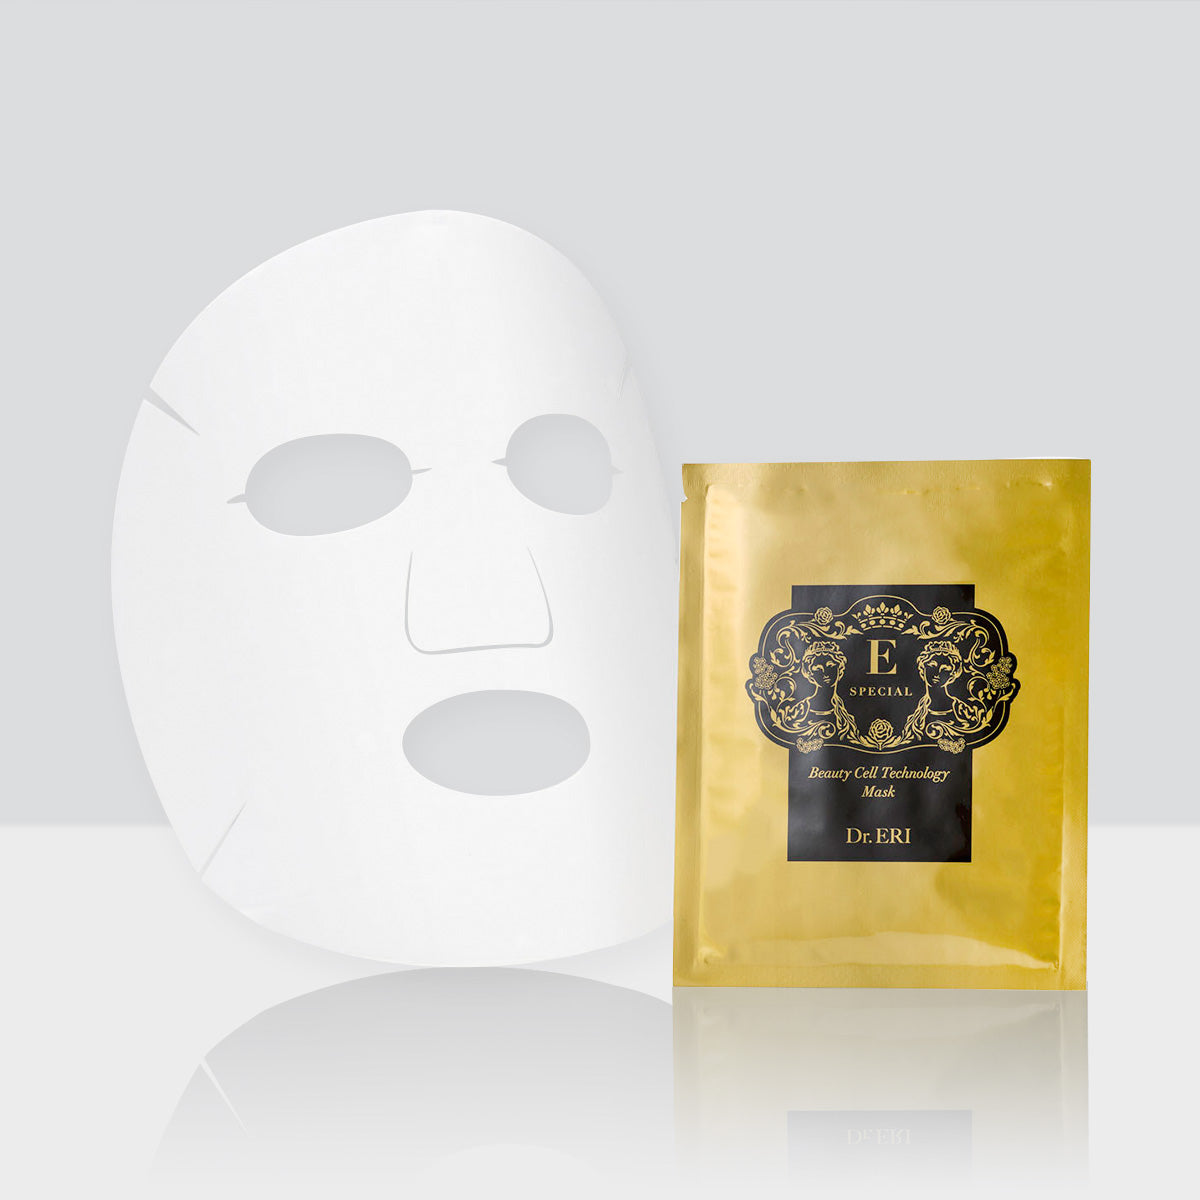 E Special Beauty Mask <Beauty Cell Technology Mask> [20mL/1张]